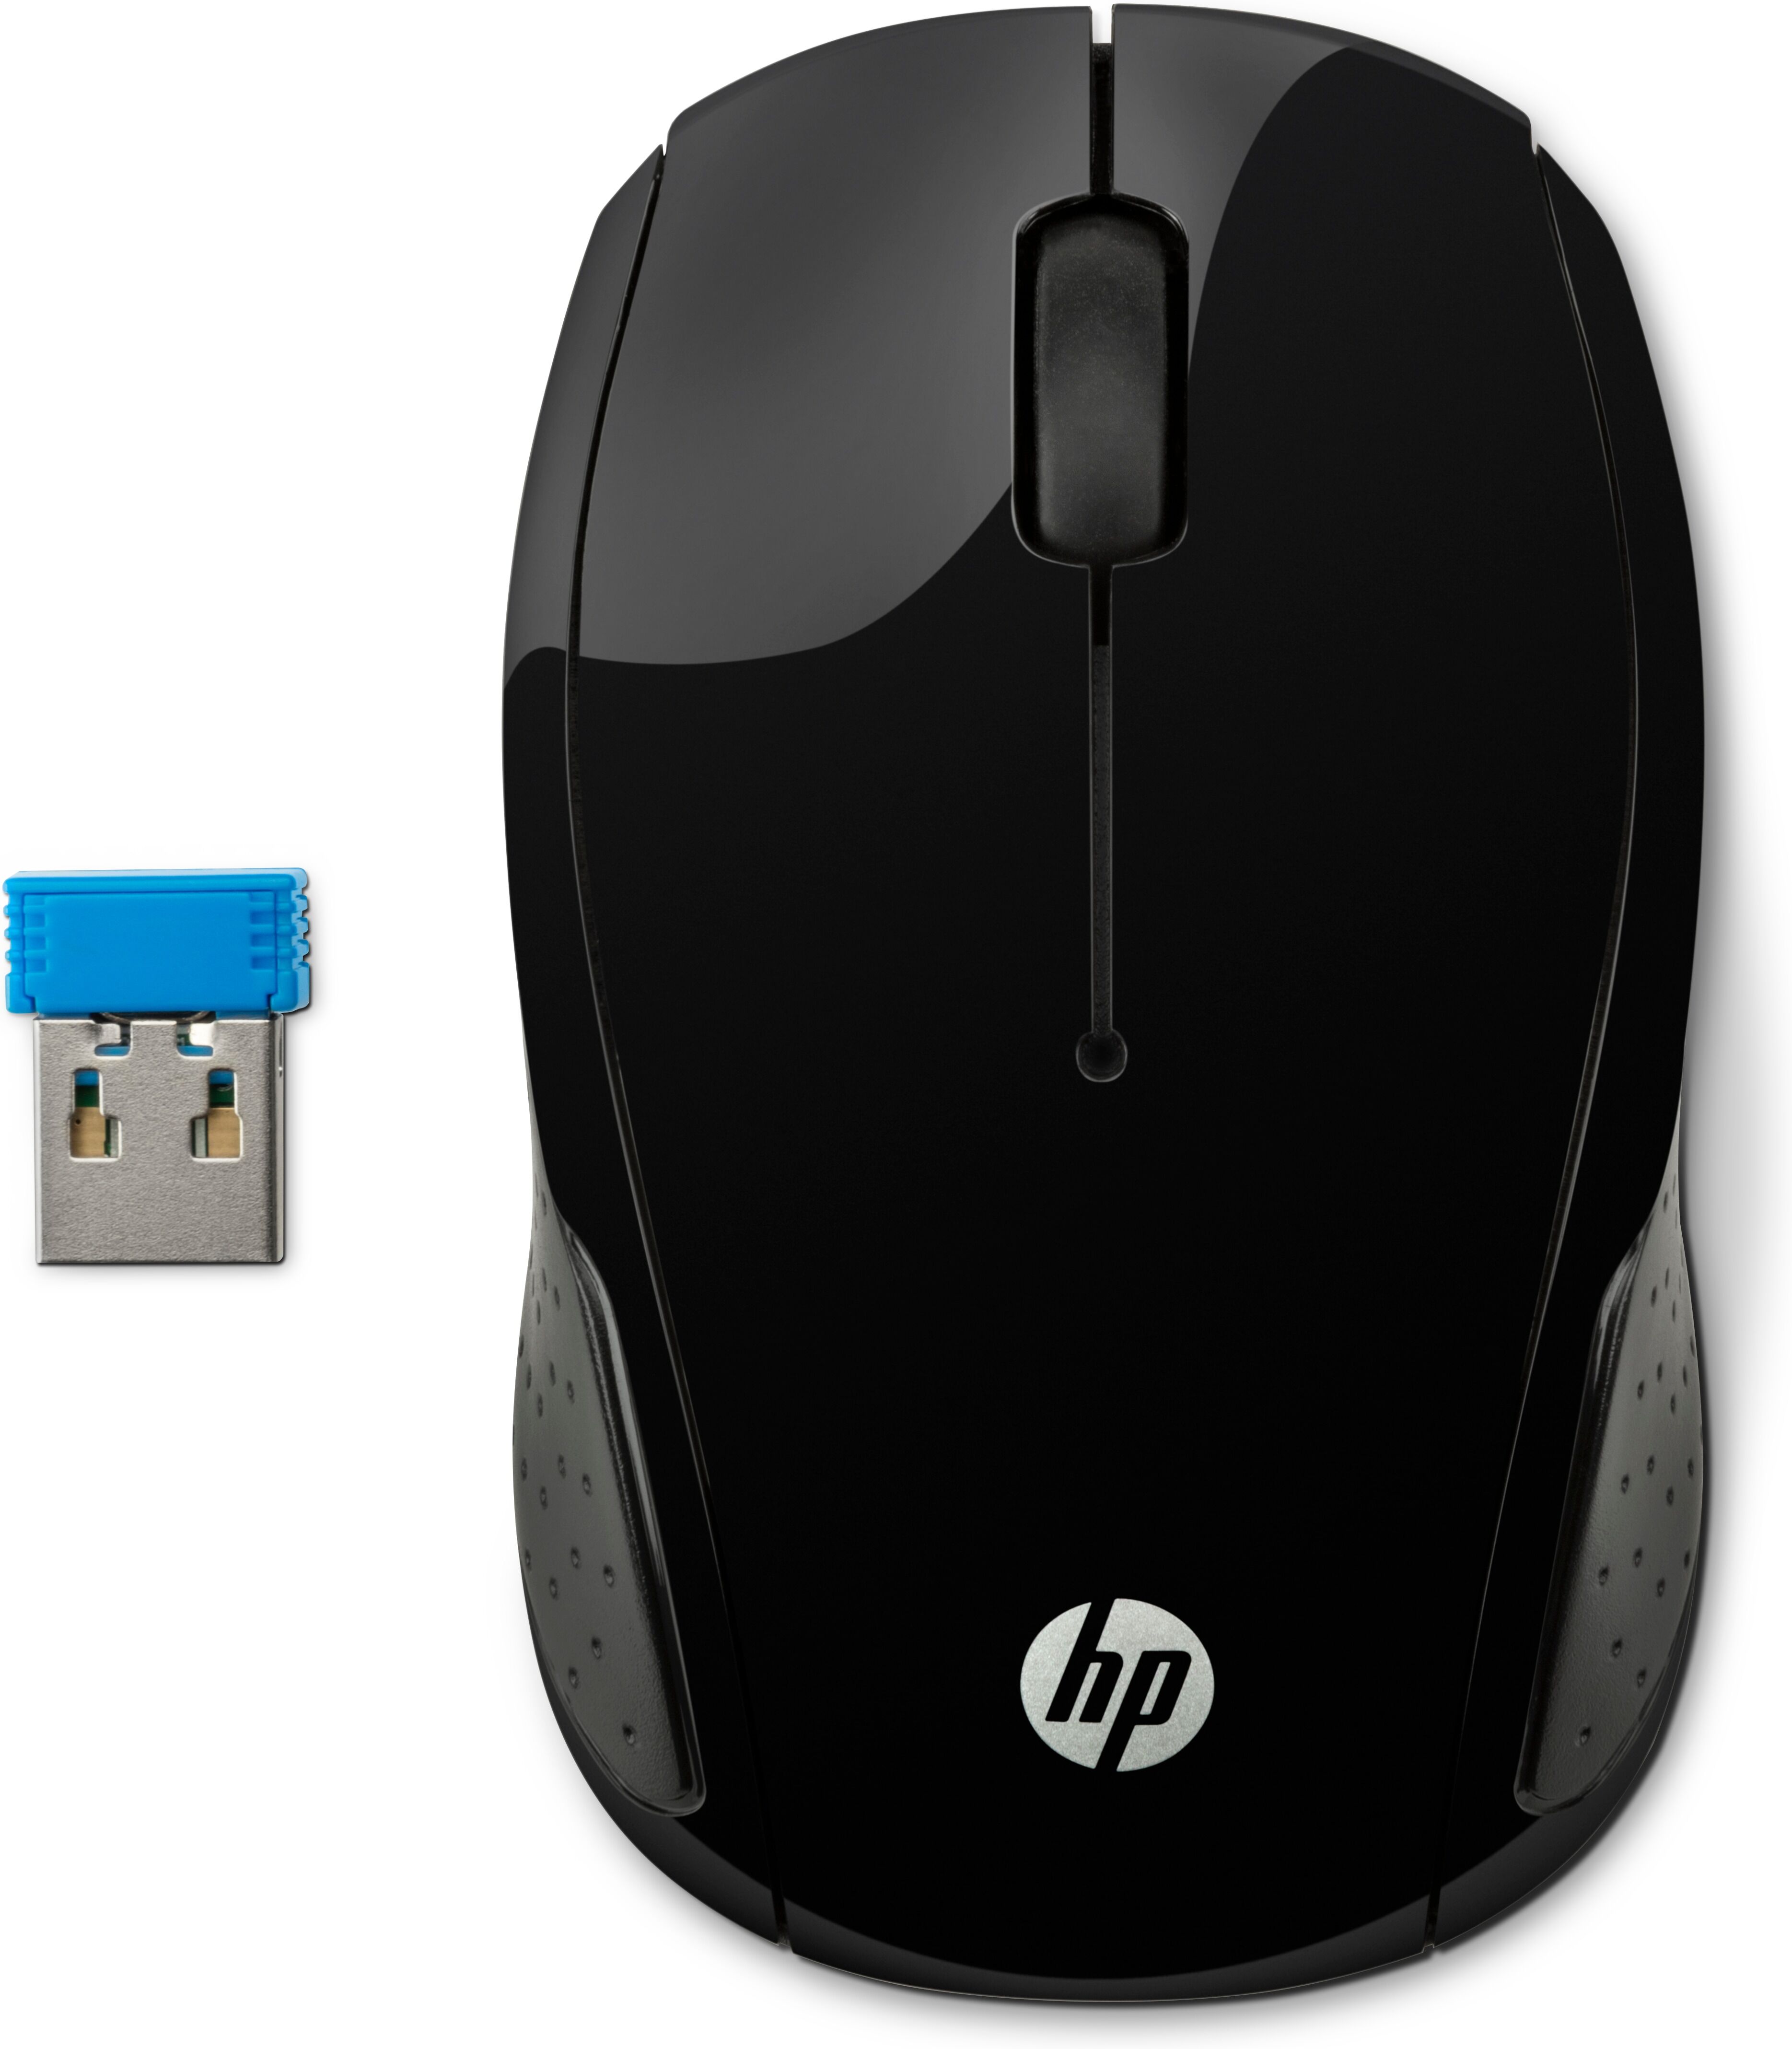 hp mouse wireless 200 black x6w31aa